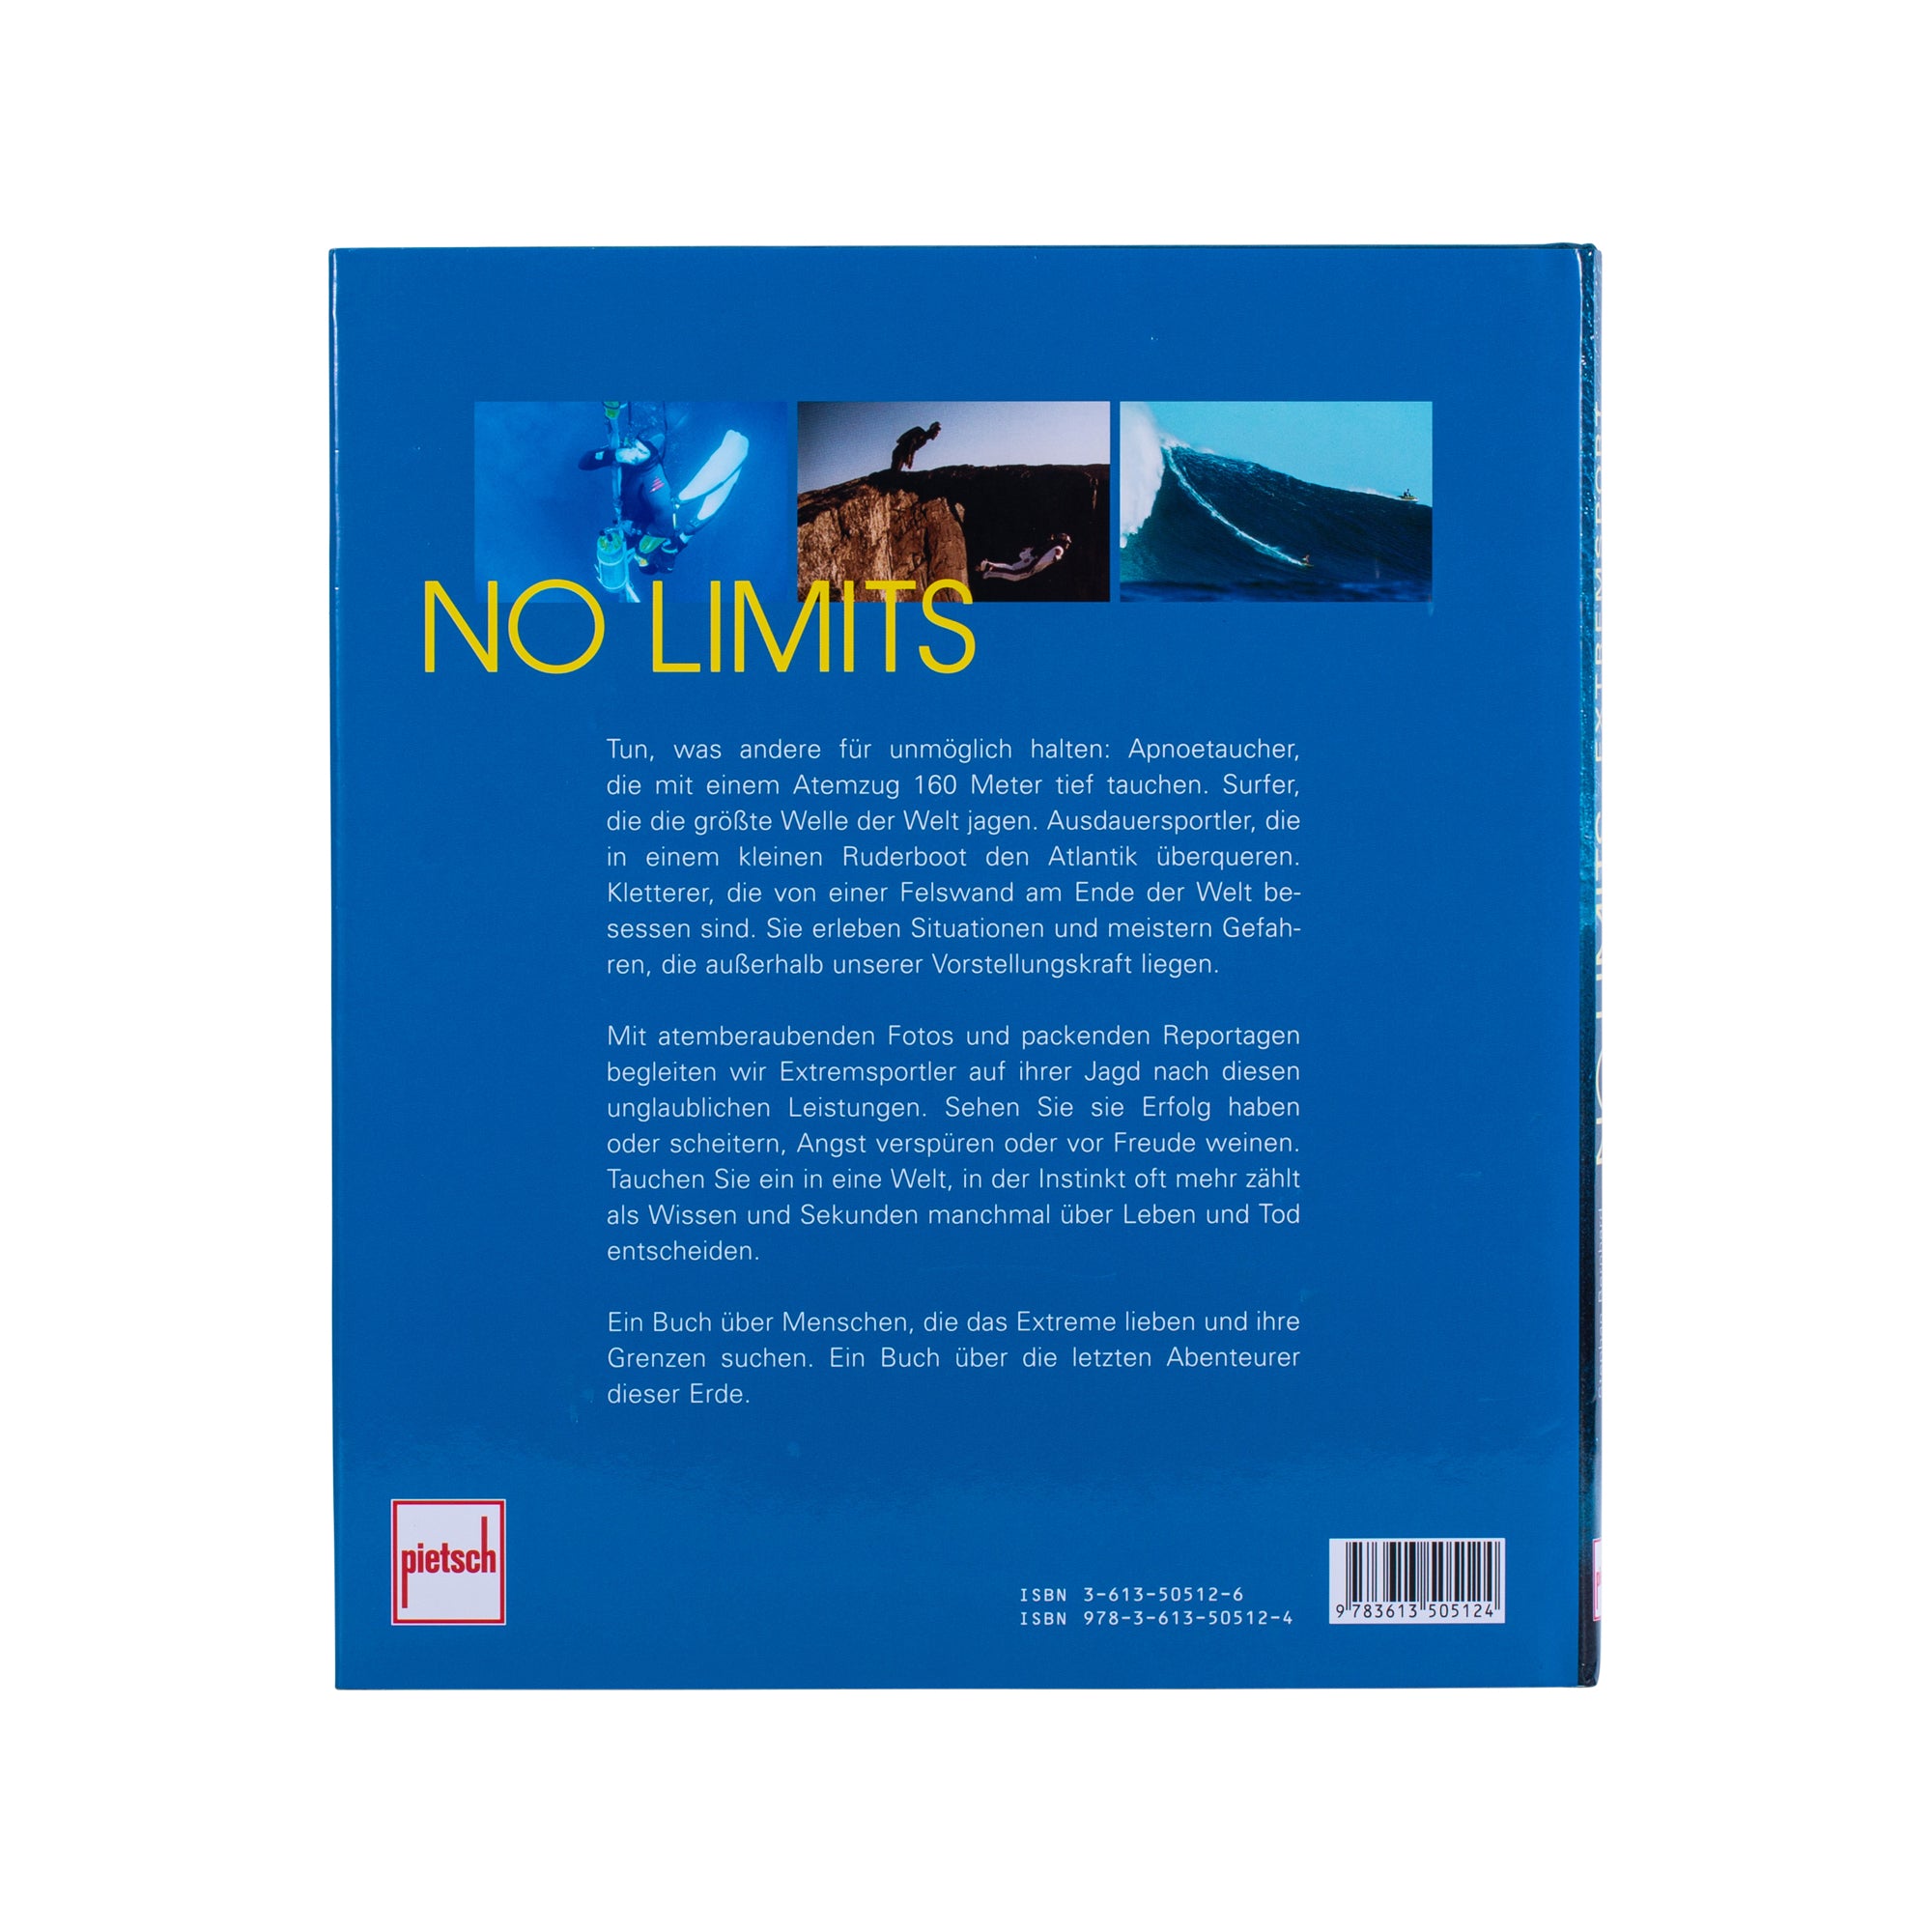 Buch No Limits Extremsport